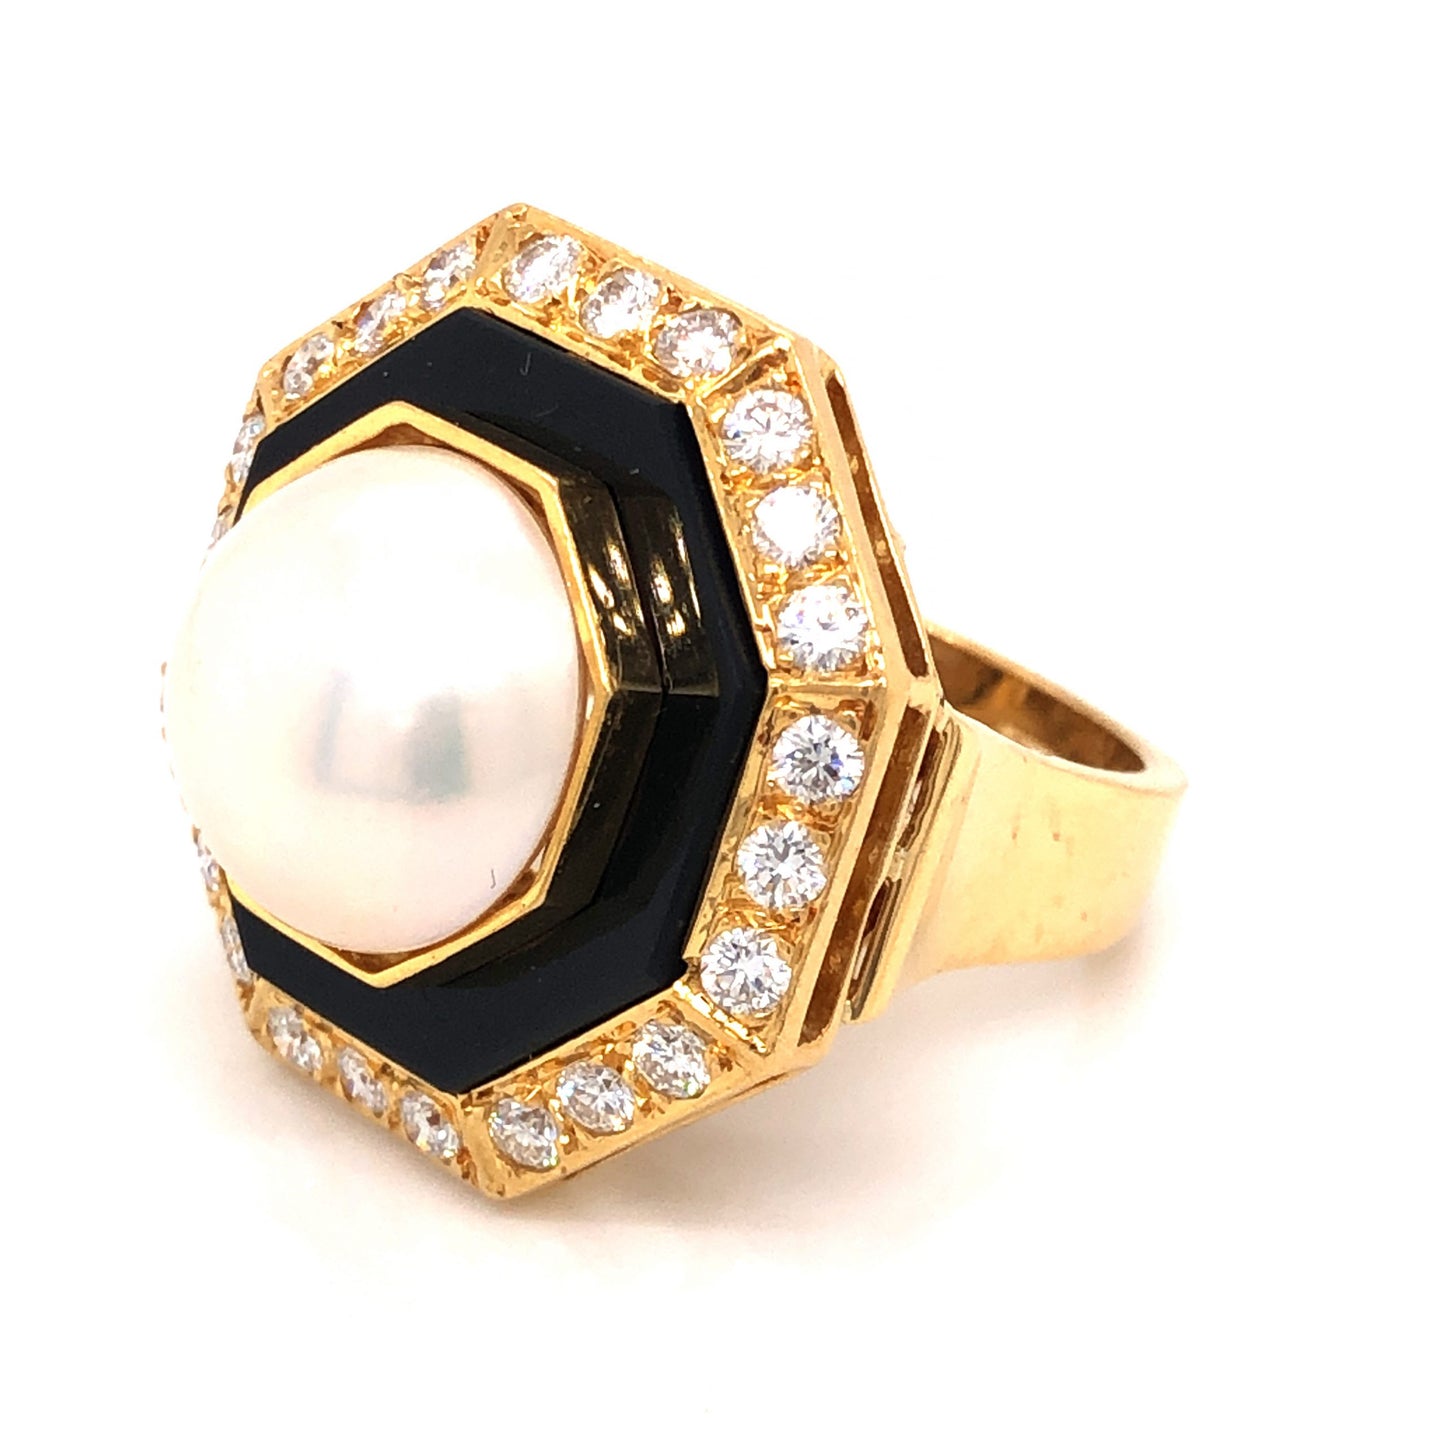 .96 Diamond & Pearl w/ Onyx Cocktail Ring 18k Yellow Gold